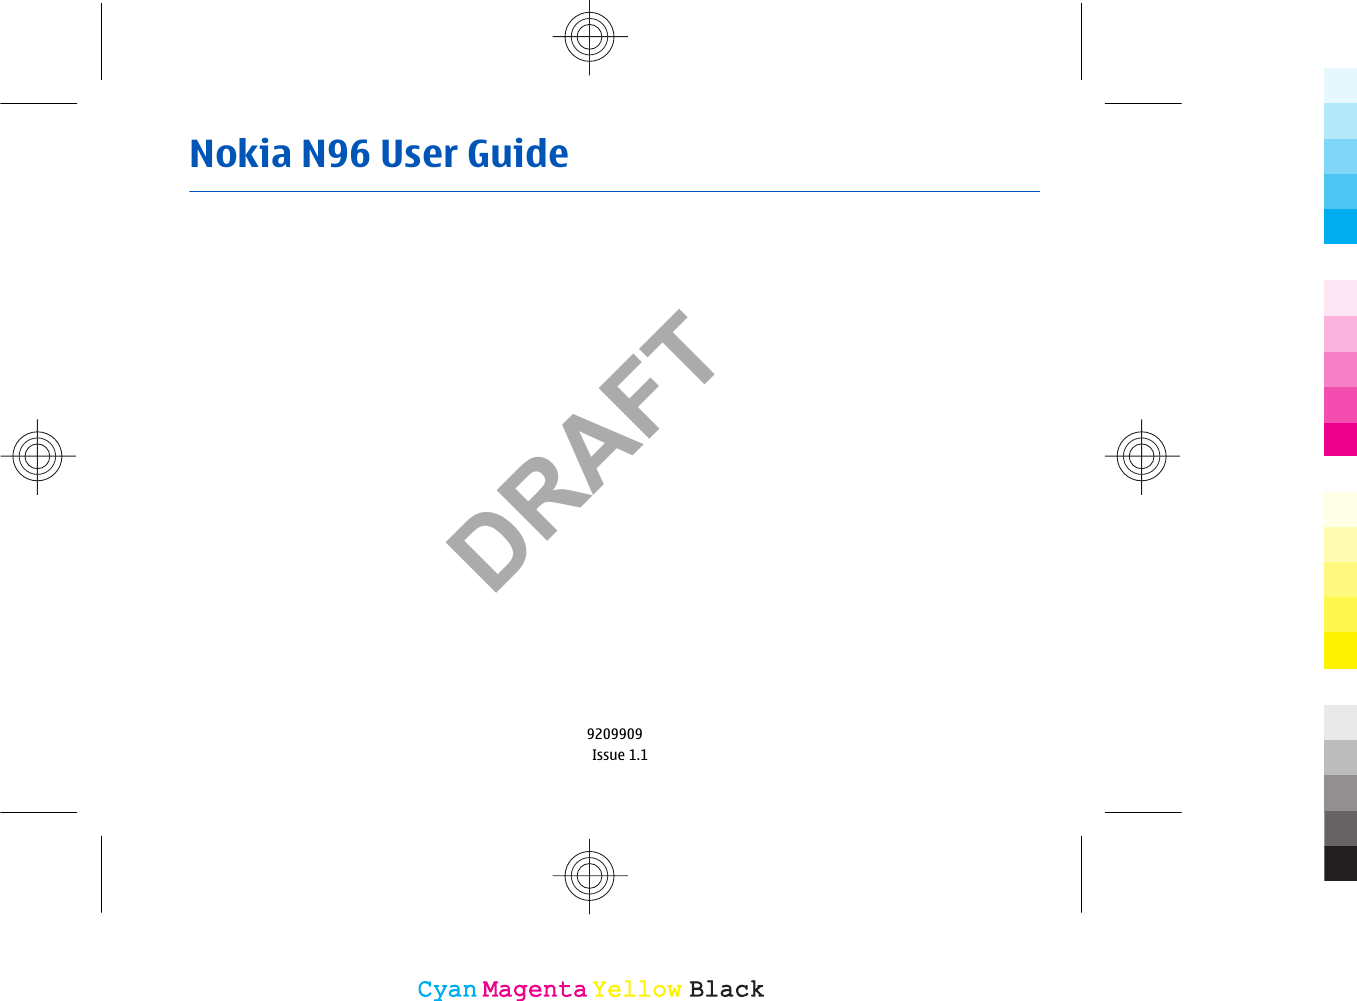 Nokia N96 User Guide9209909Issue 1.1CyanCyanMagentaMagentaYellowYellowBlackBlackDRAFT